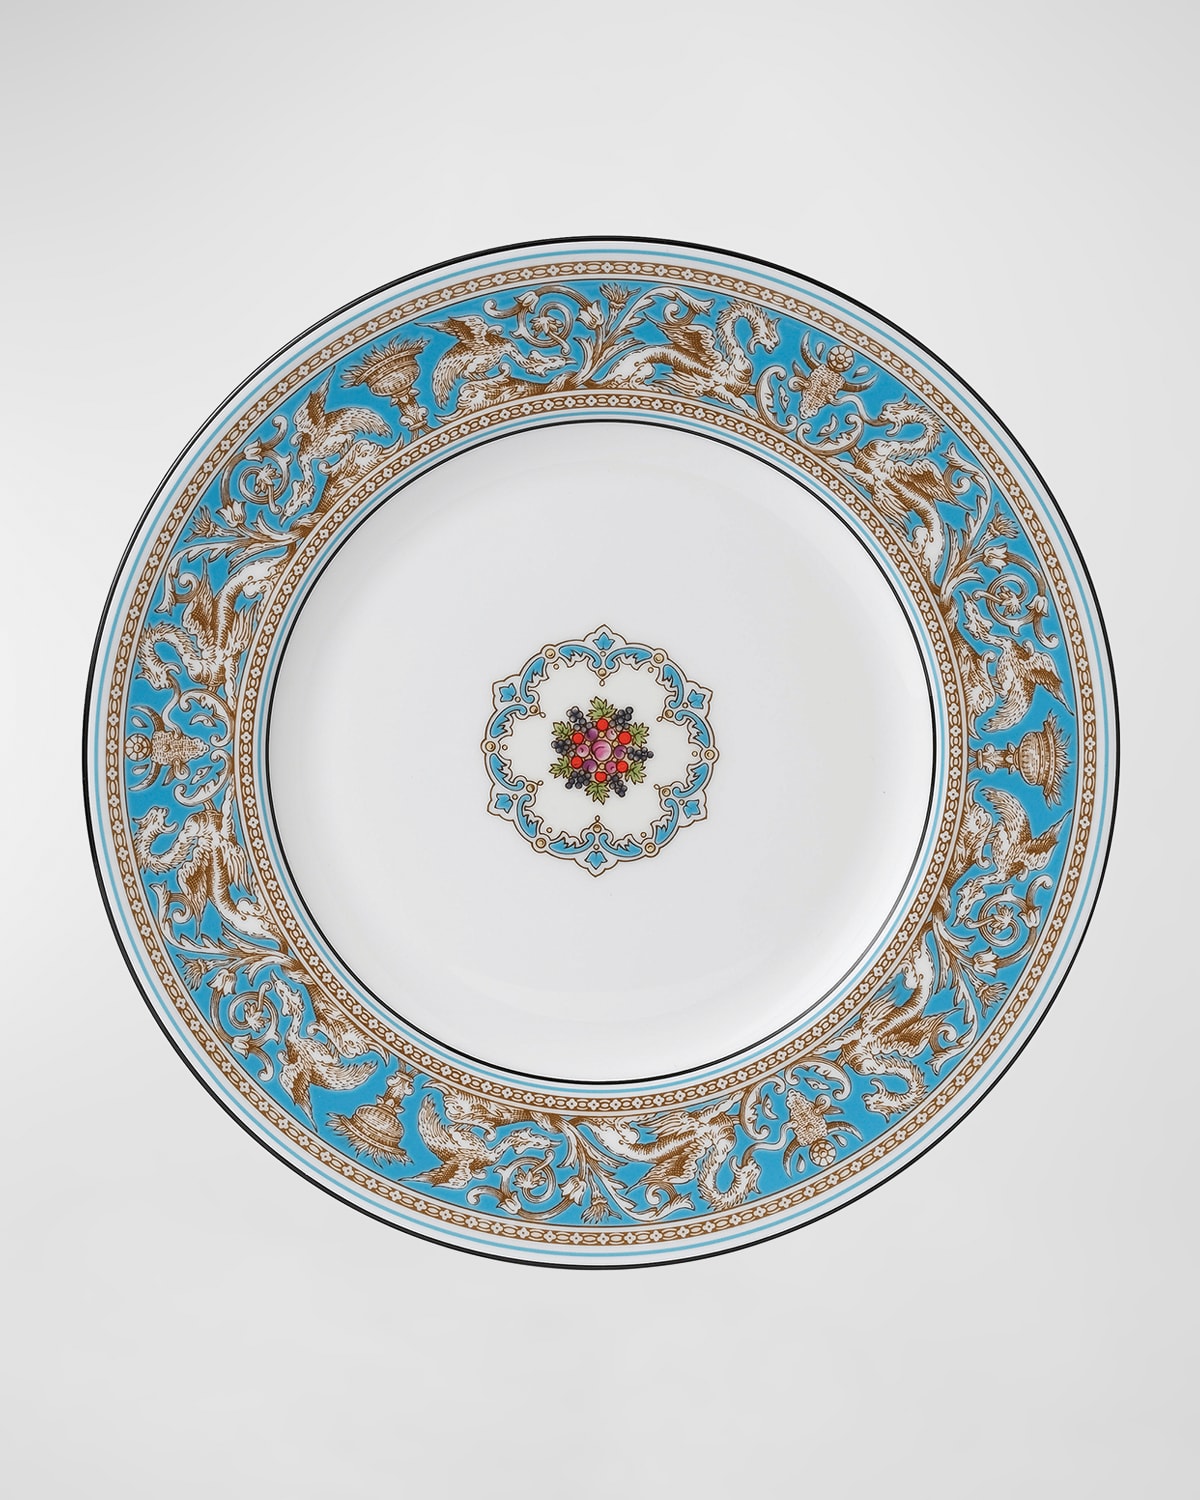 Florentine Turquoise Dinner Plate 10.75"